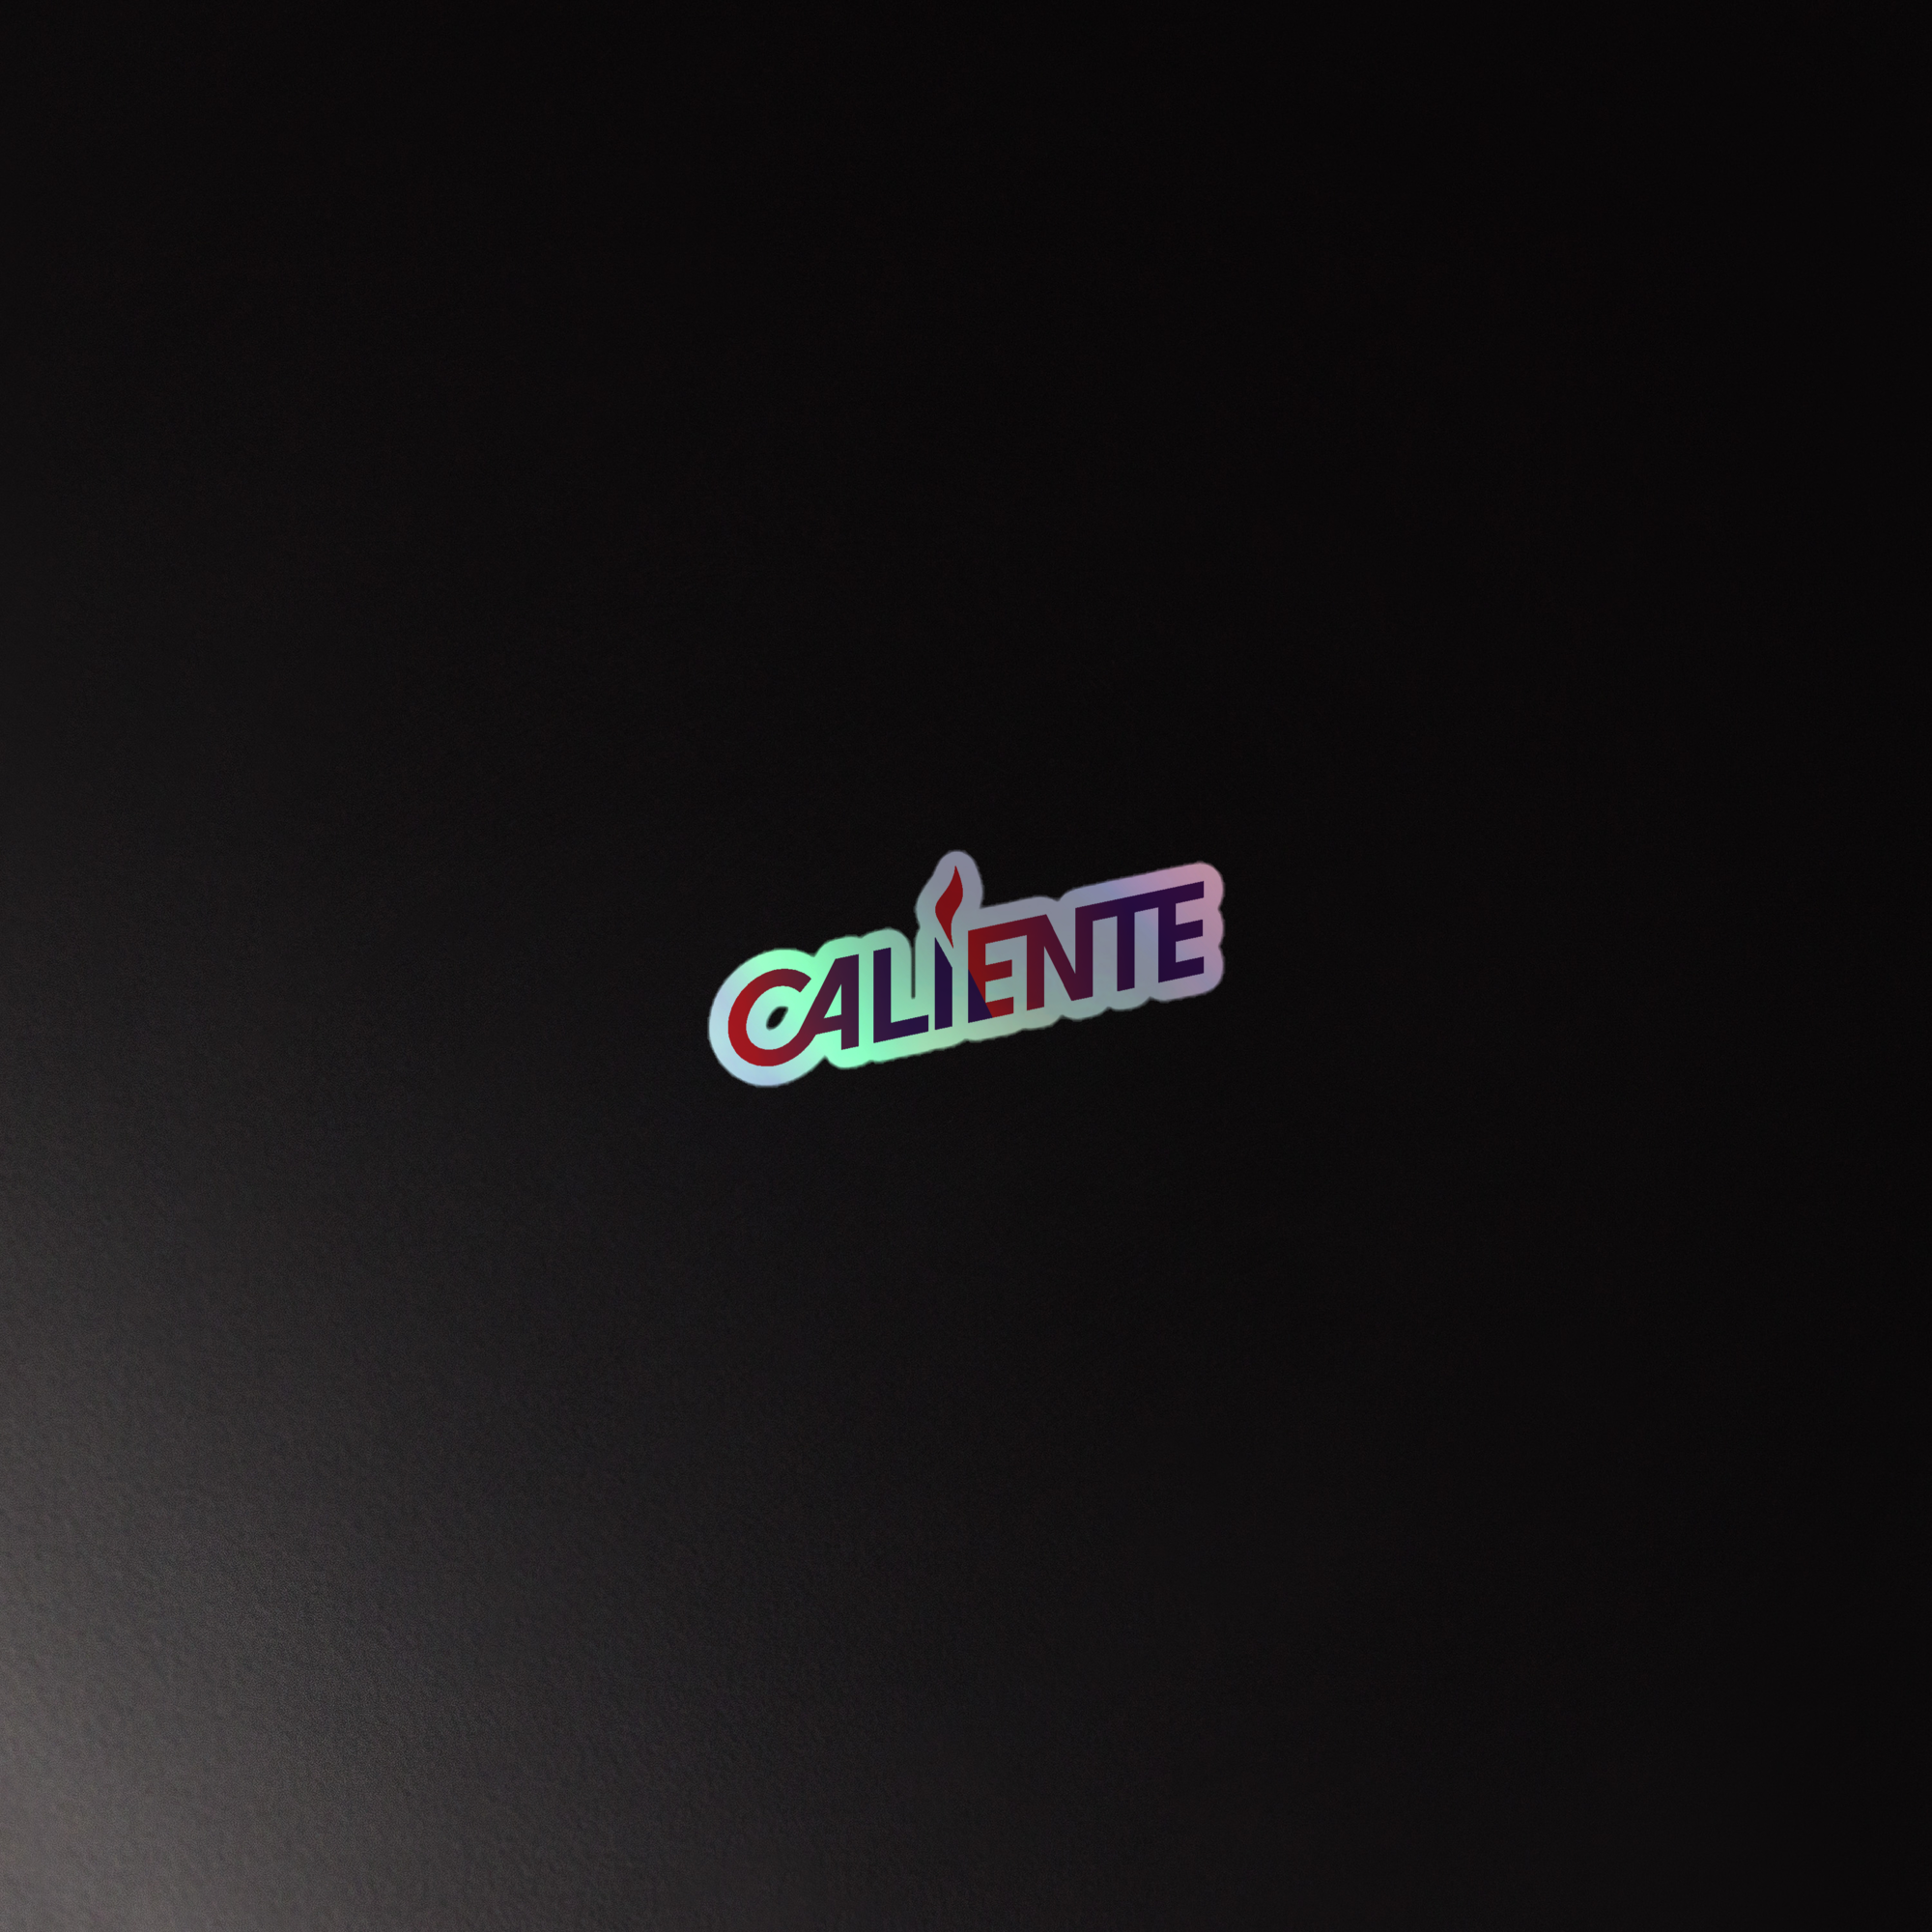 Caliente: Holographic Sticker